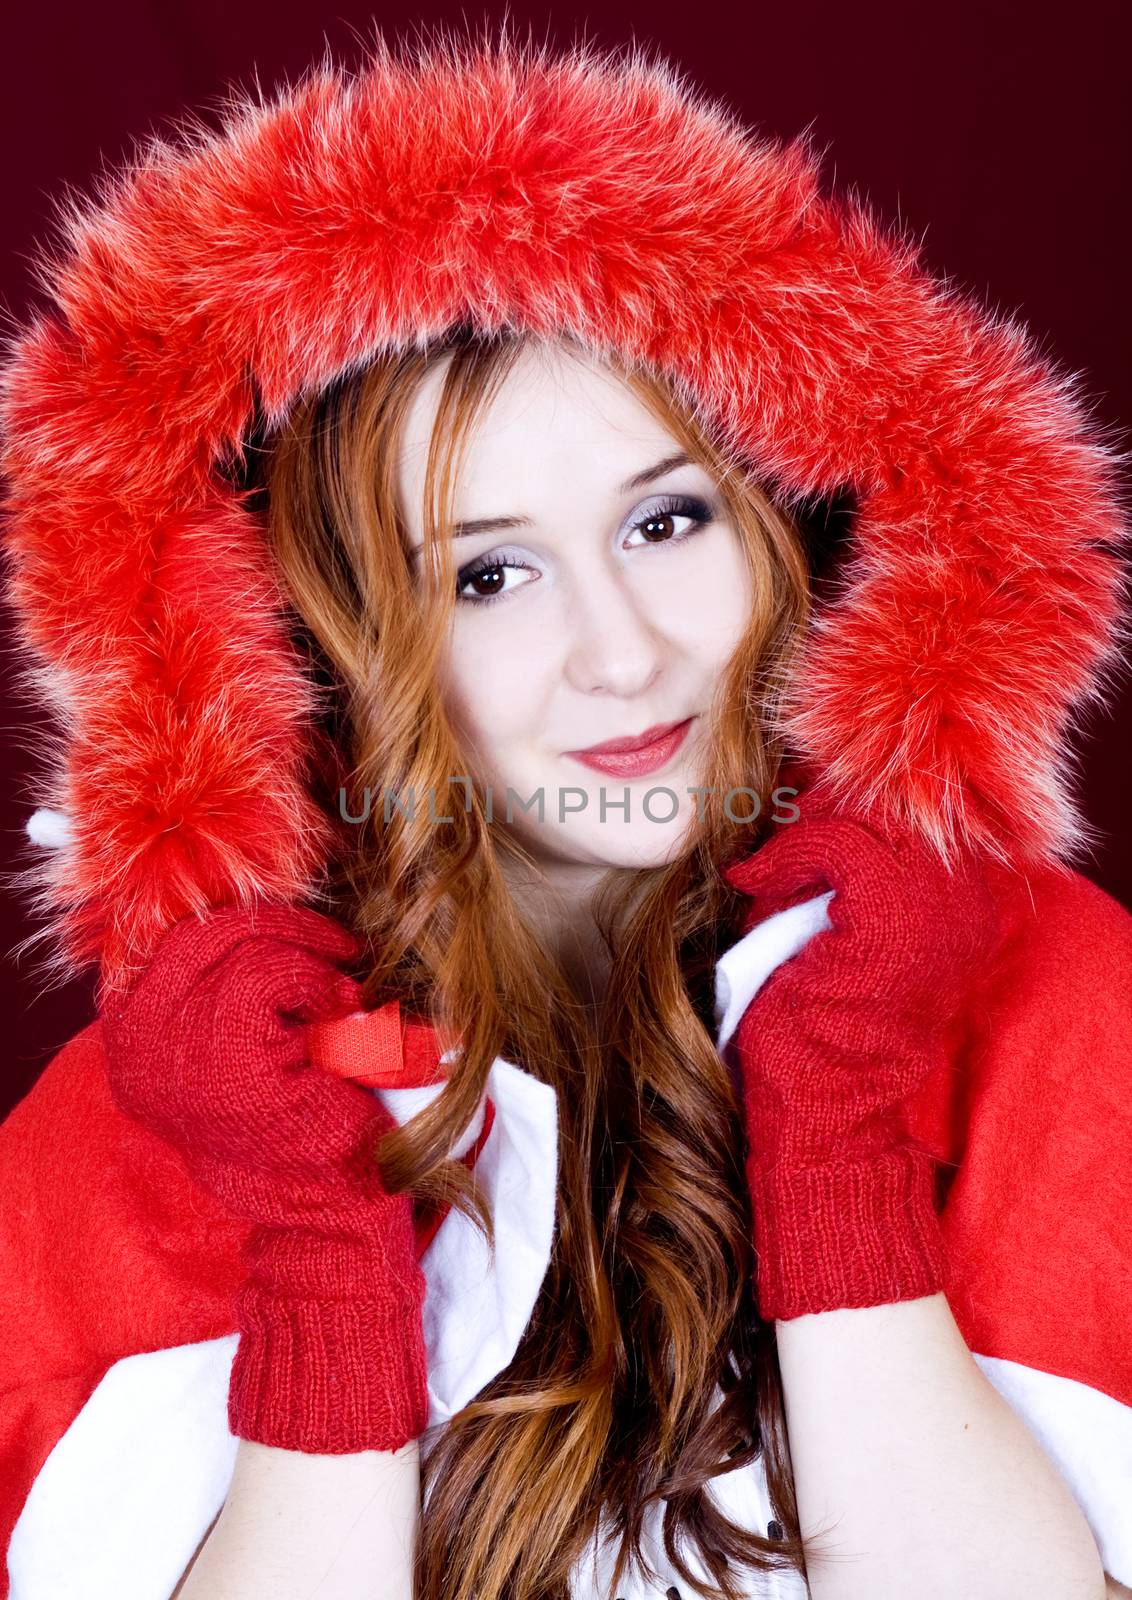 Beautiful girl and Christmas spirit by Irina1977